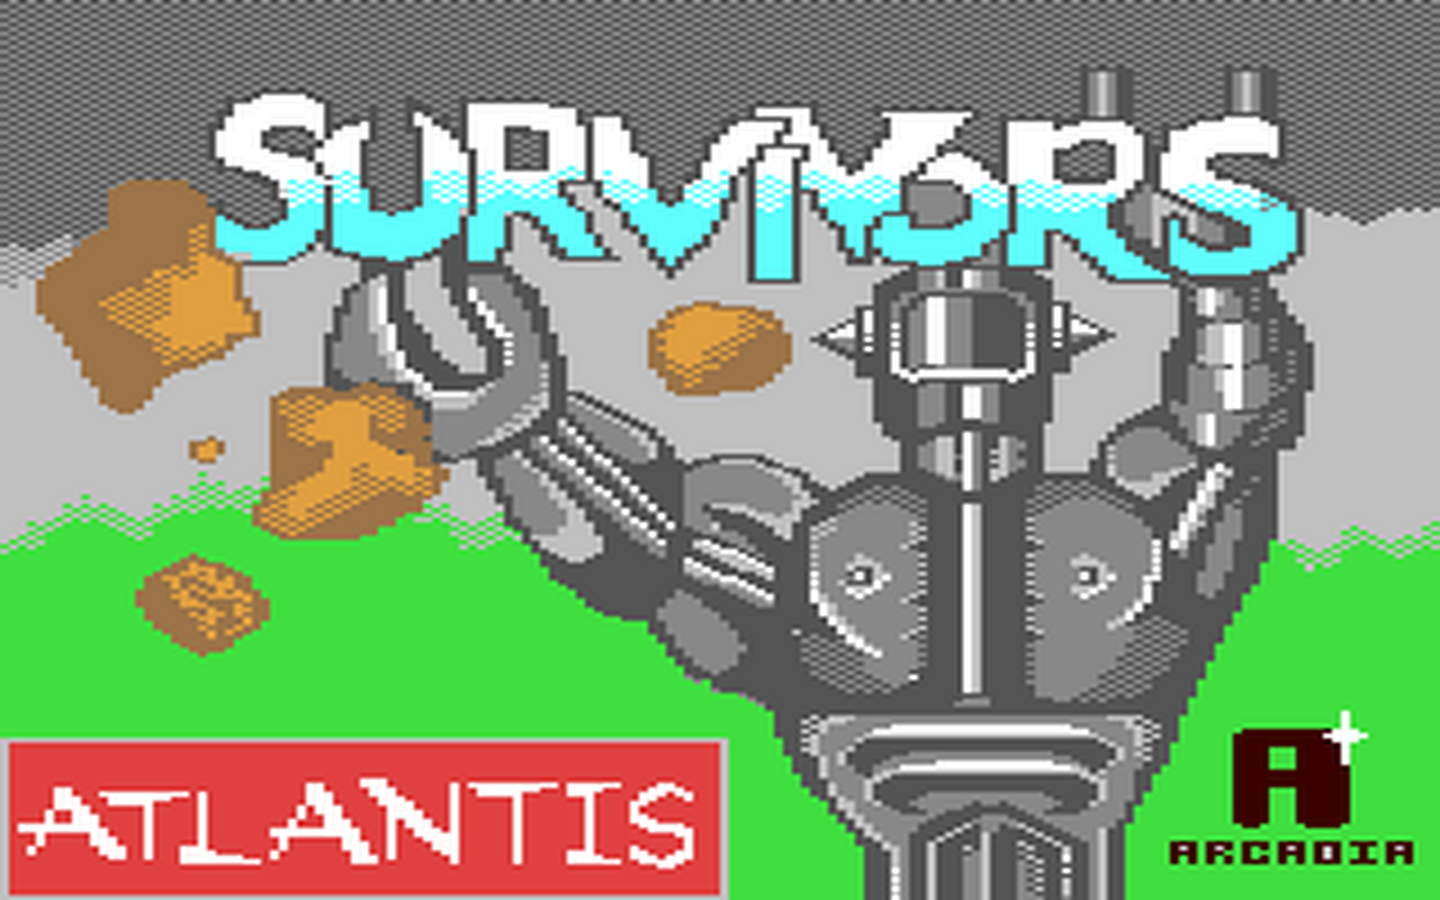 C64 GameBase Survivors,_The Atlantis_Software_Ltd. 1987